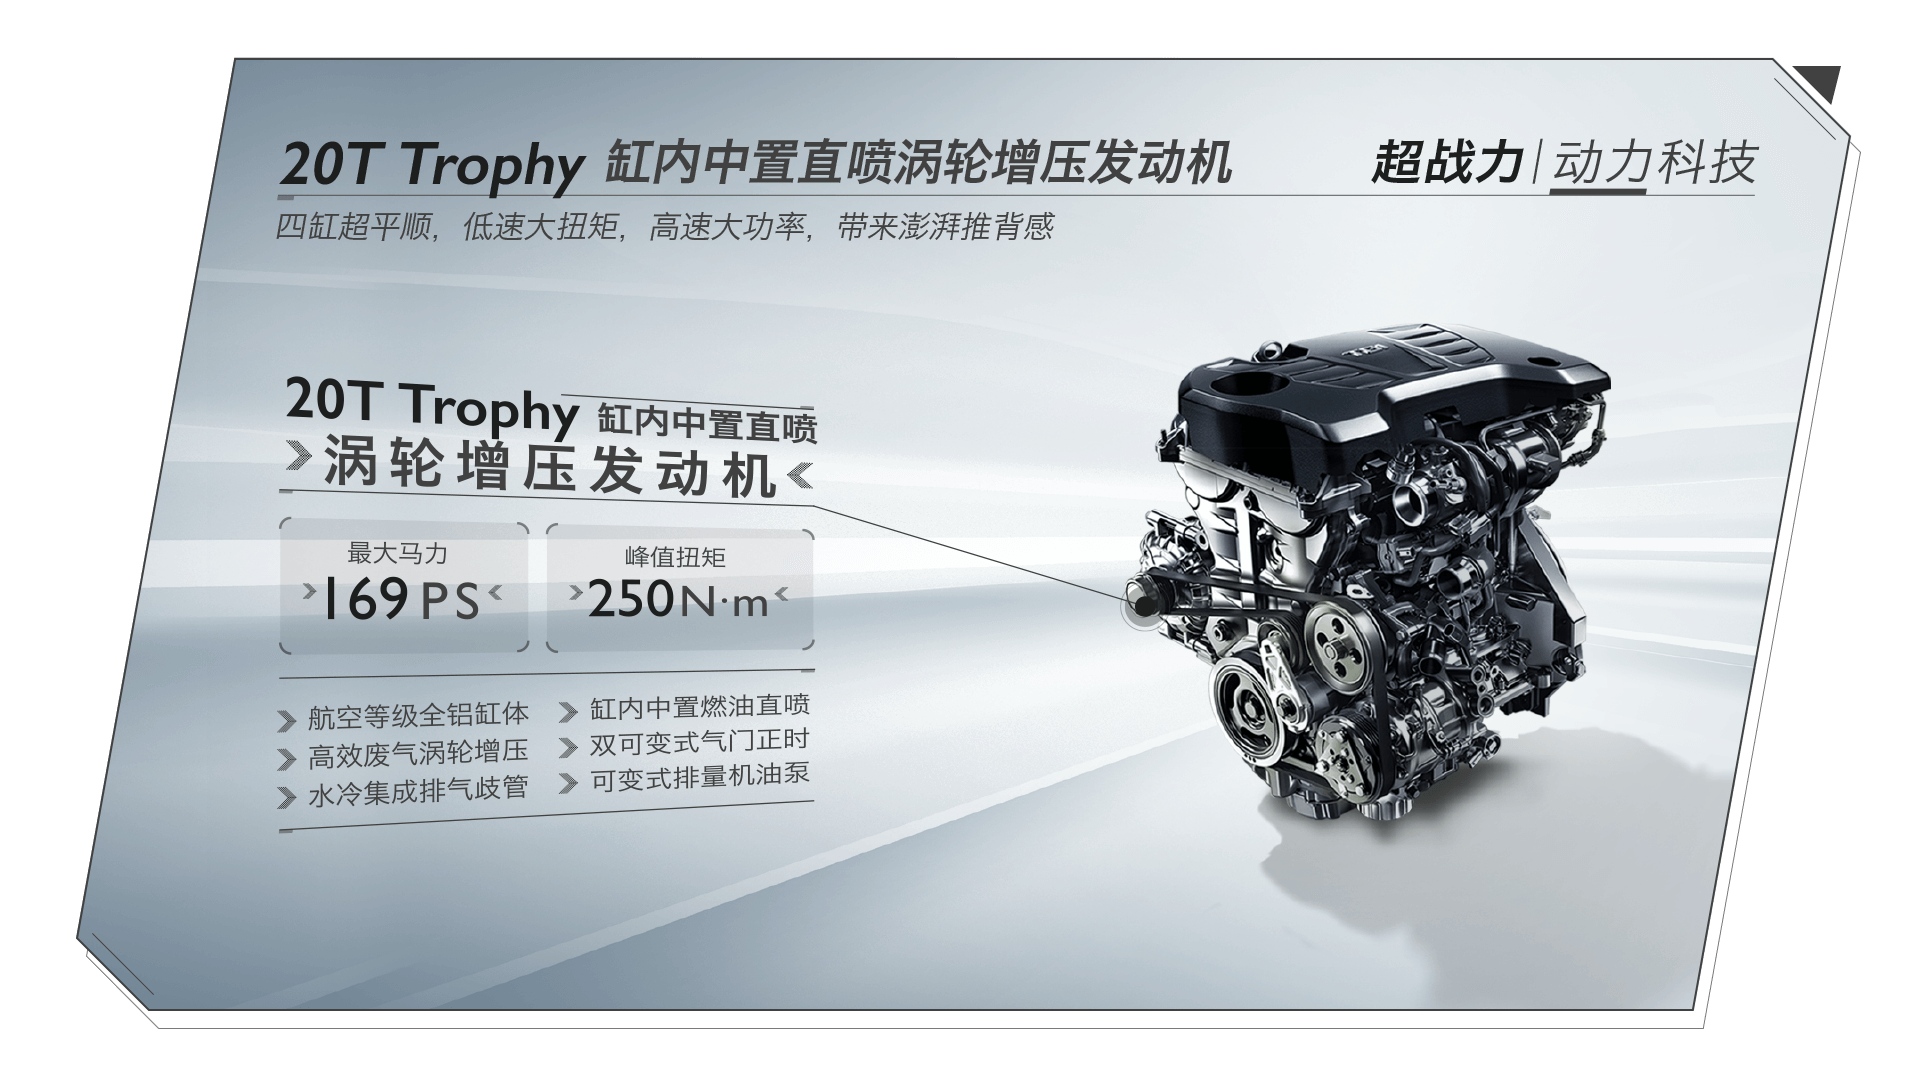 20T Trophy 缸内中置直喷涡轮增压发动机